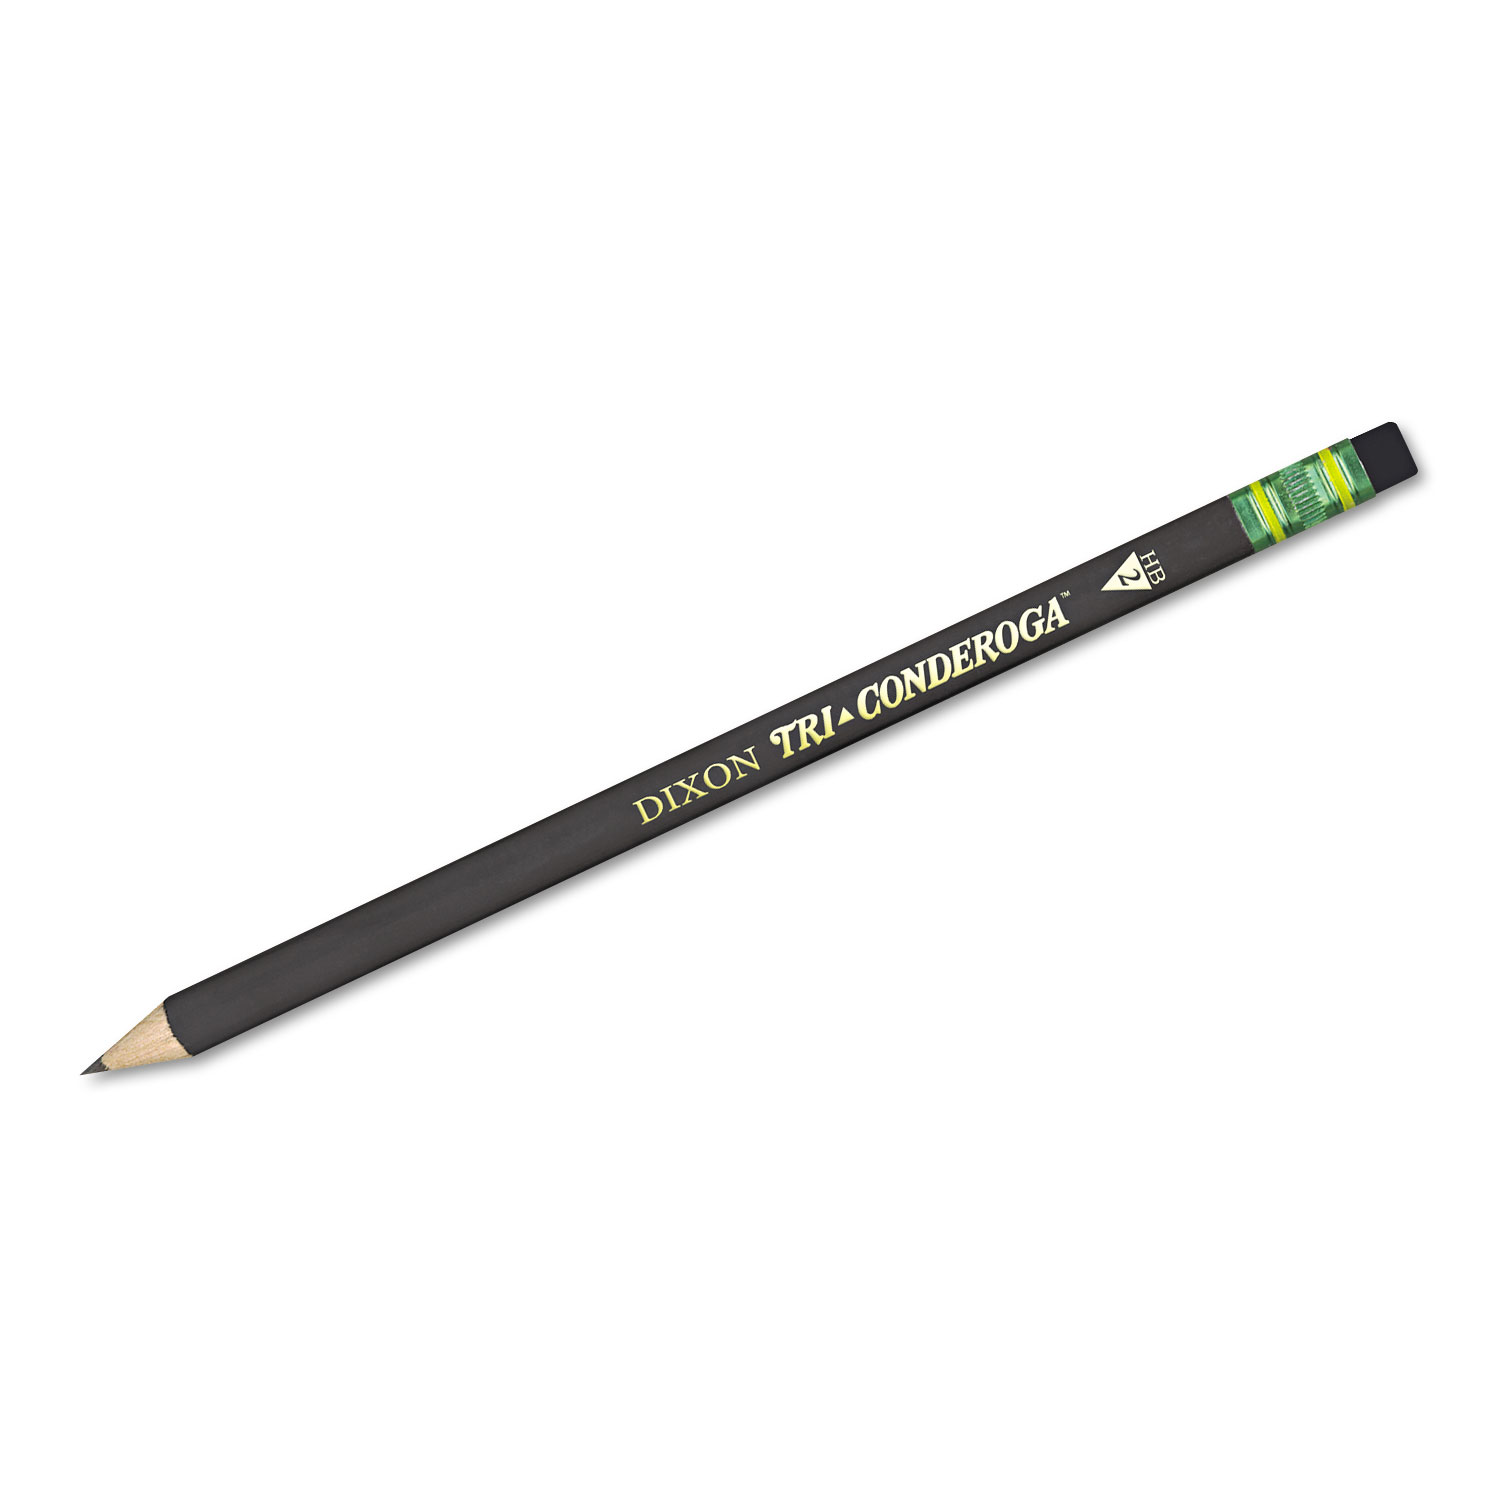  Dixon 22500 Tri-Conderoga Pencil with Microban Protection, HB (#2), Black Lead, Black Barrel, Dozen (DIX22500) 